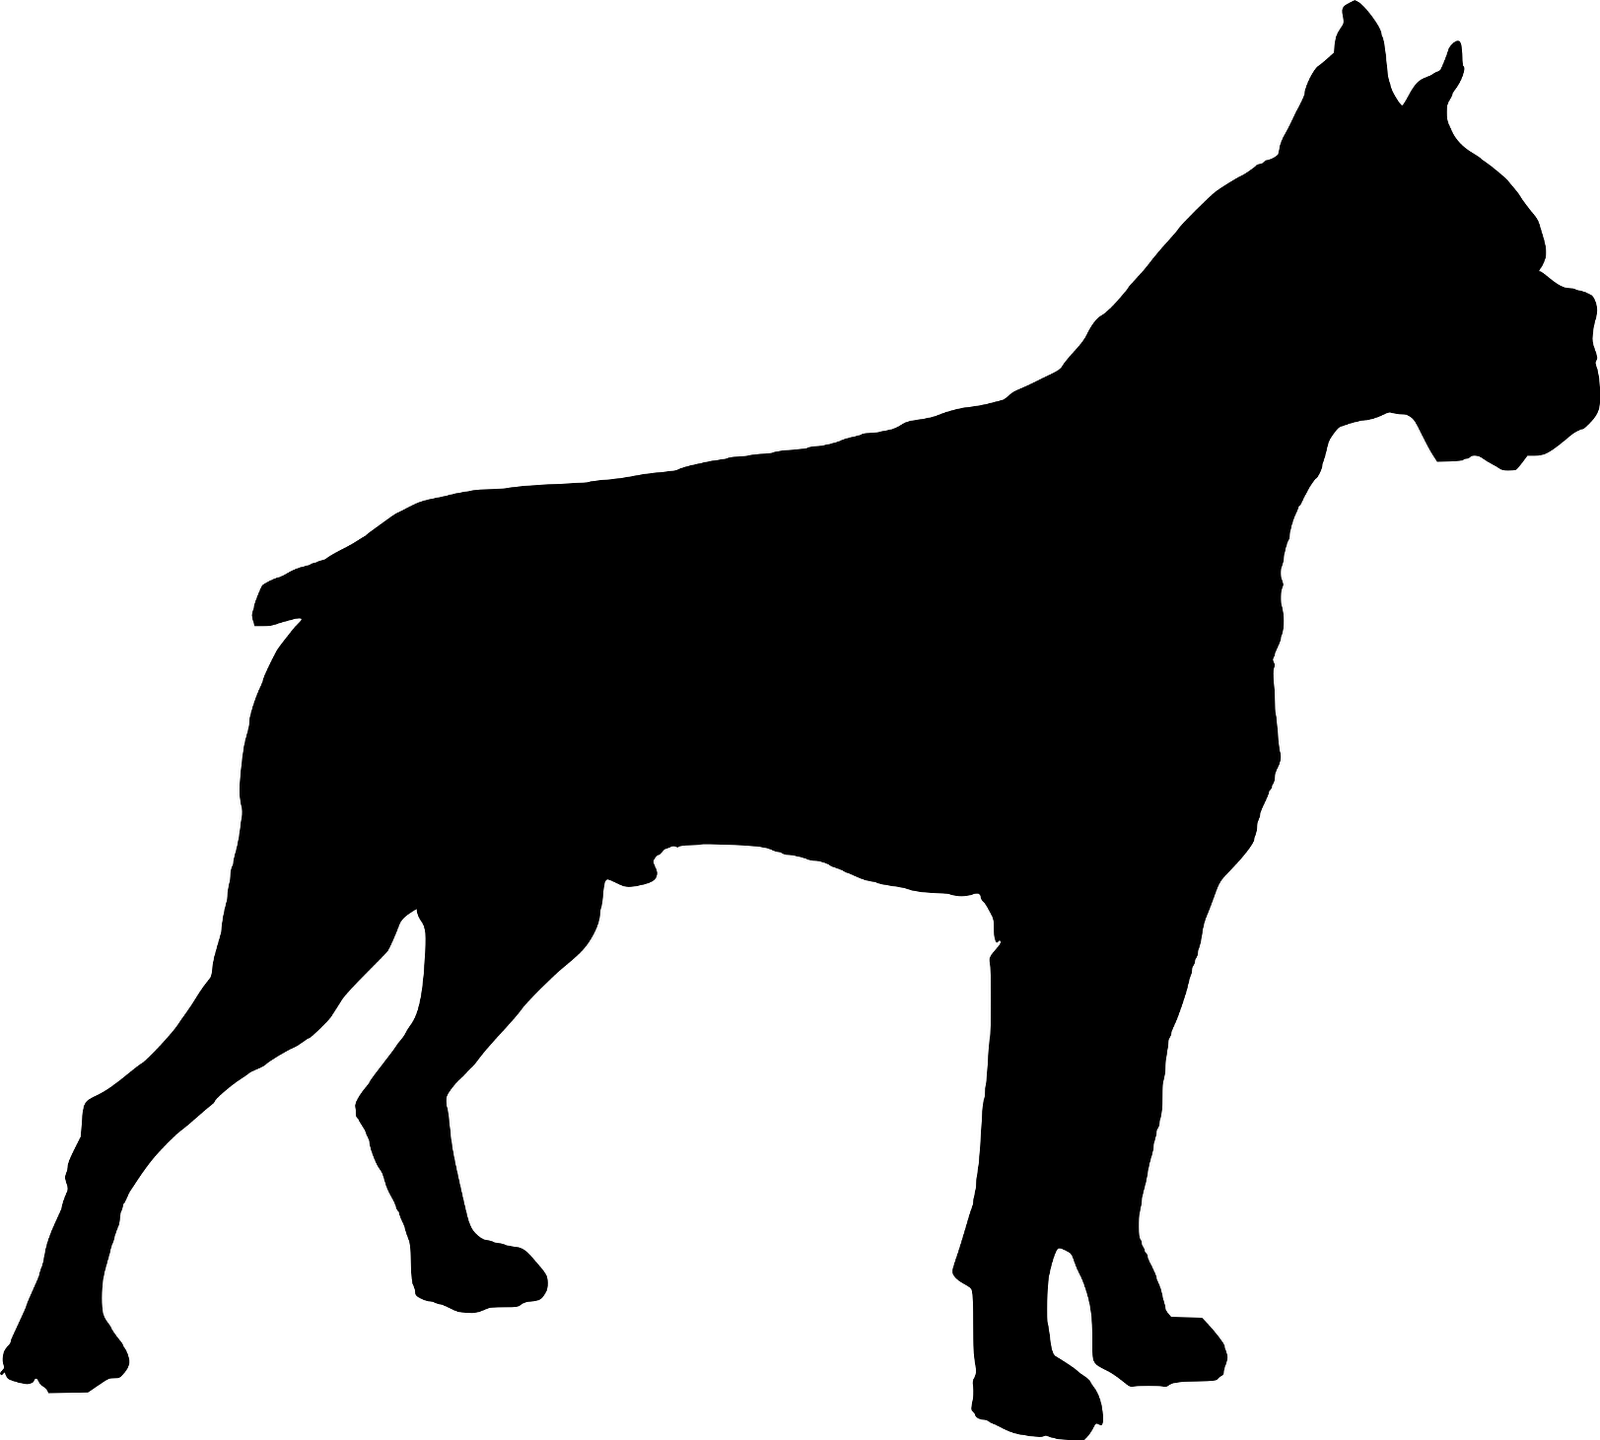 Boxer dog clipart black and white - ClipartFox